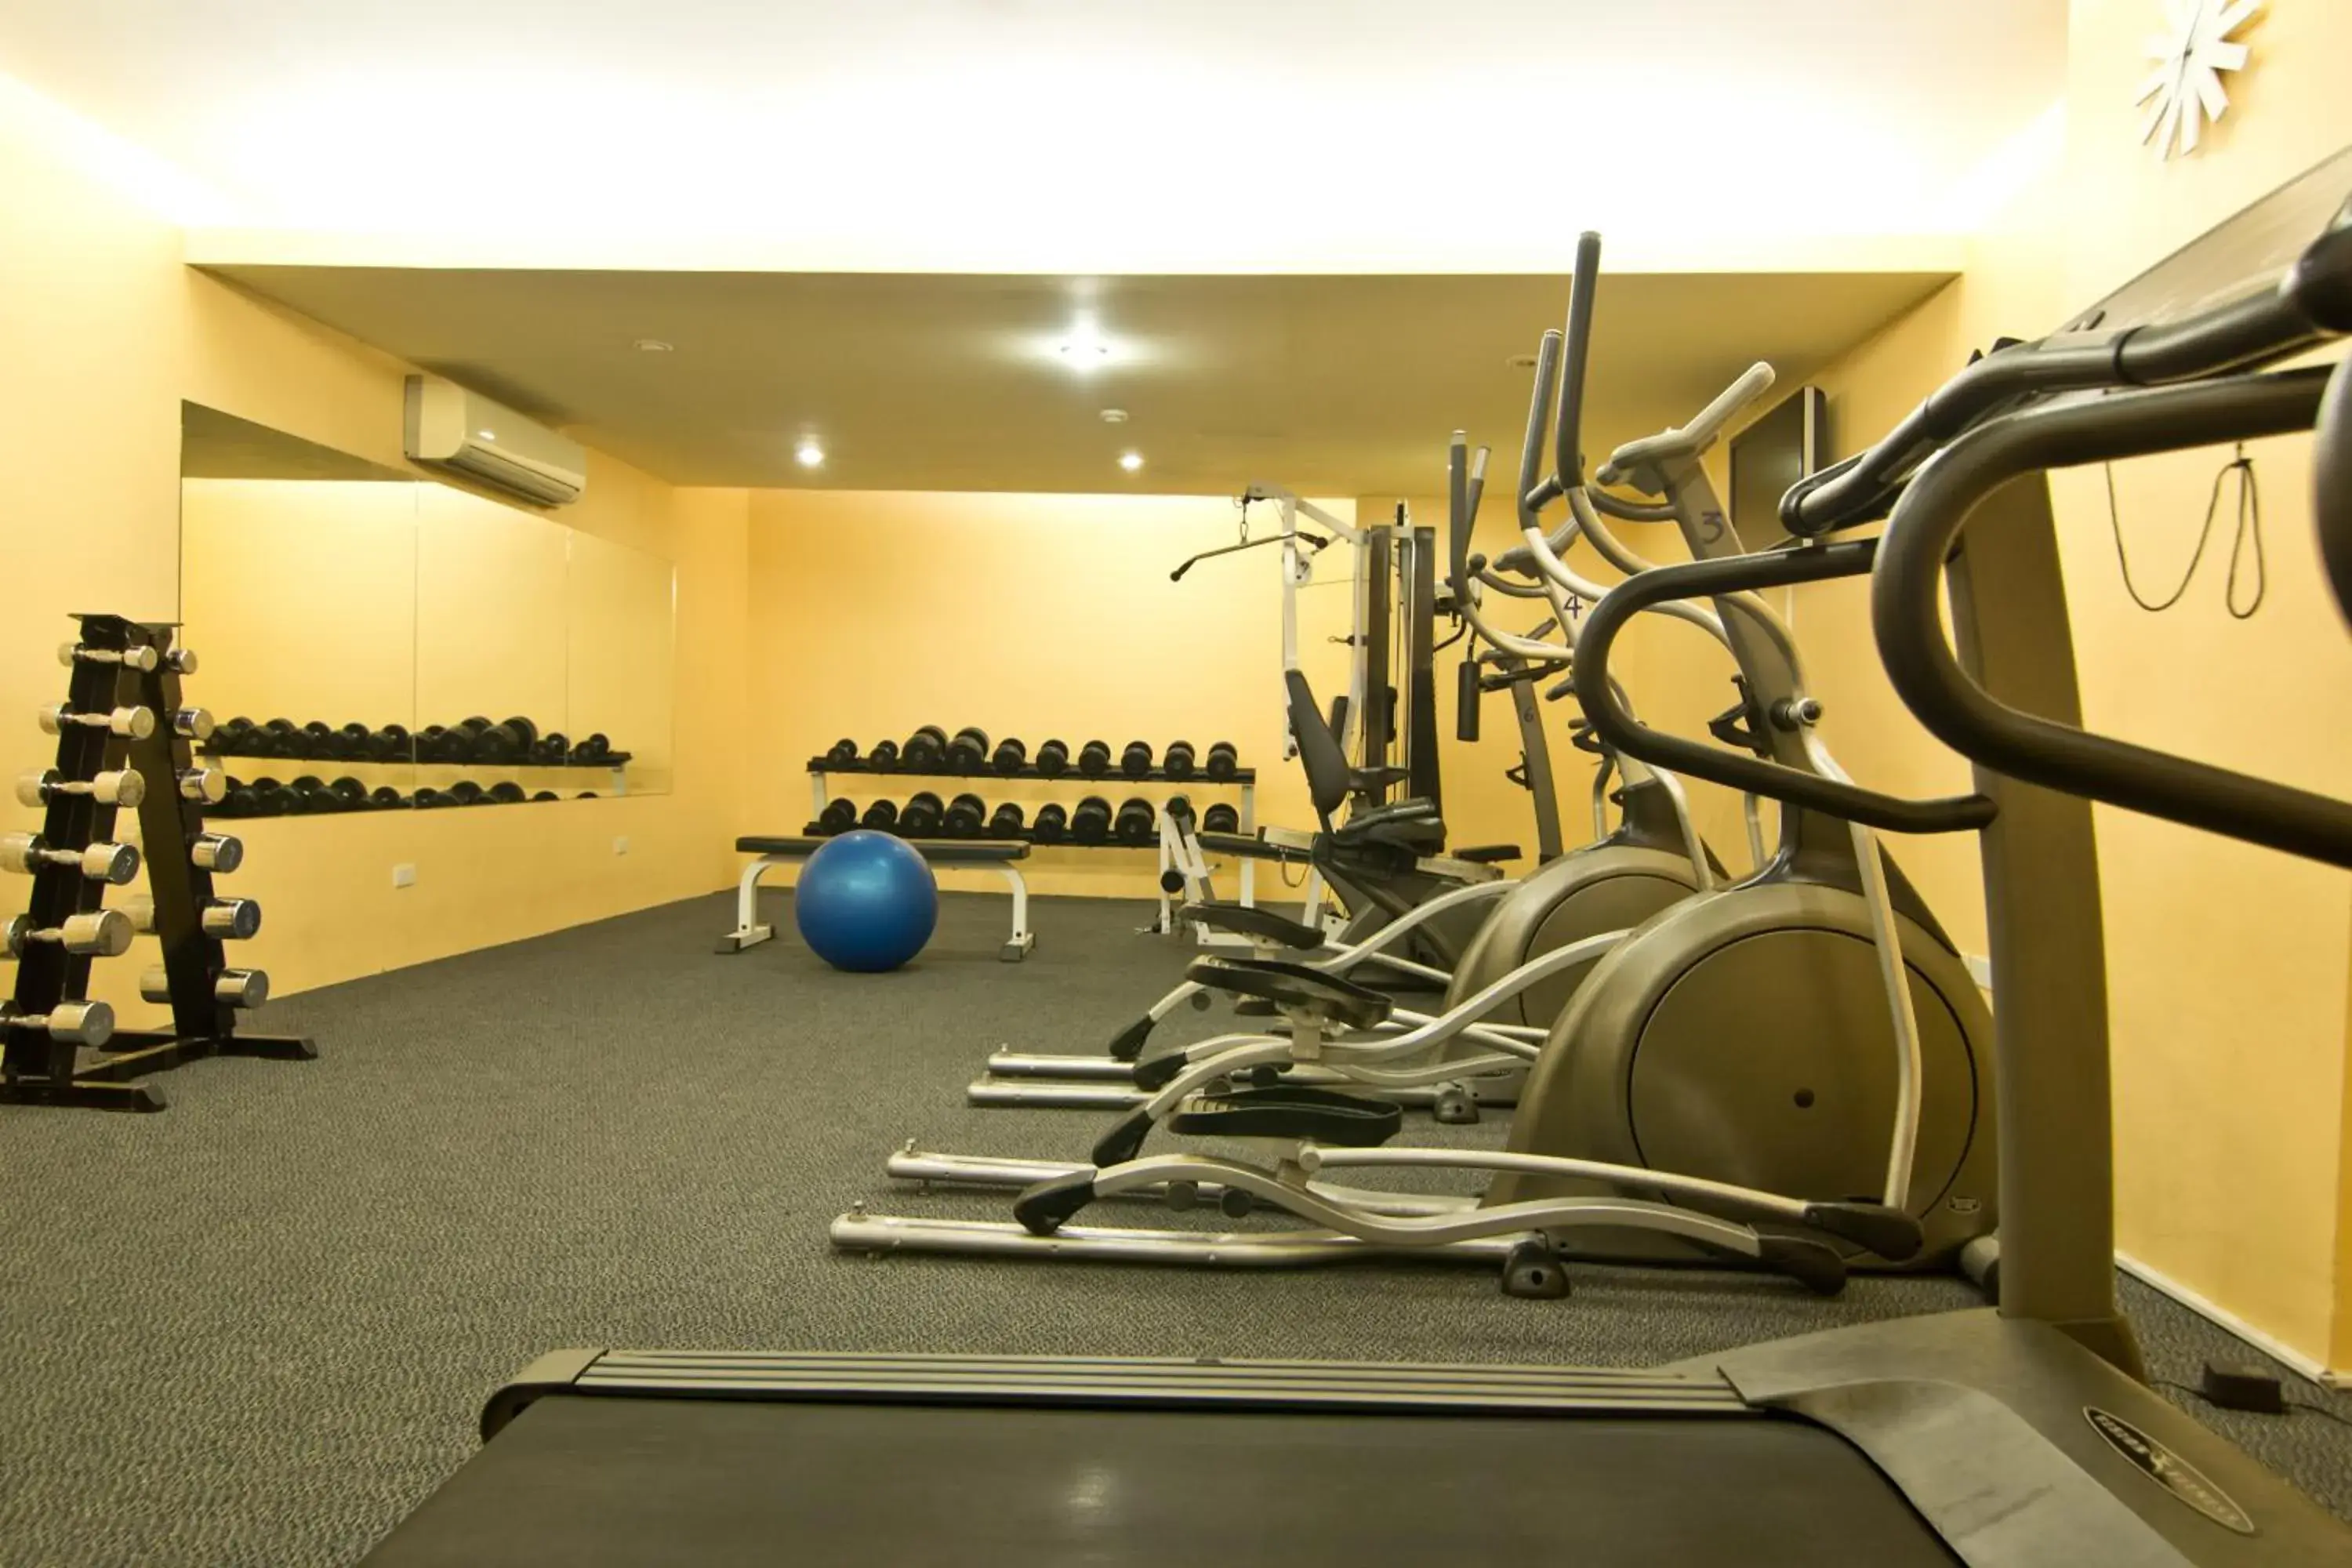 Fitness centre/facilities, Fitness Center/Facilities in Best Bella Pattaya